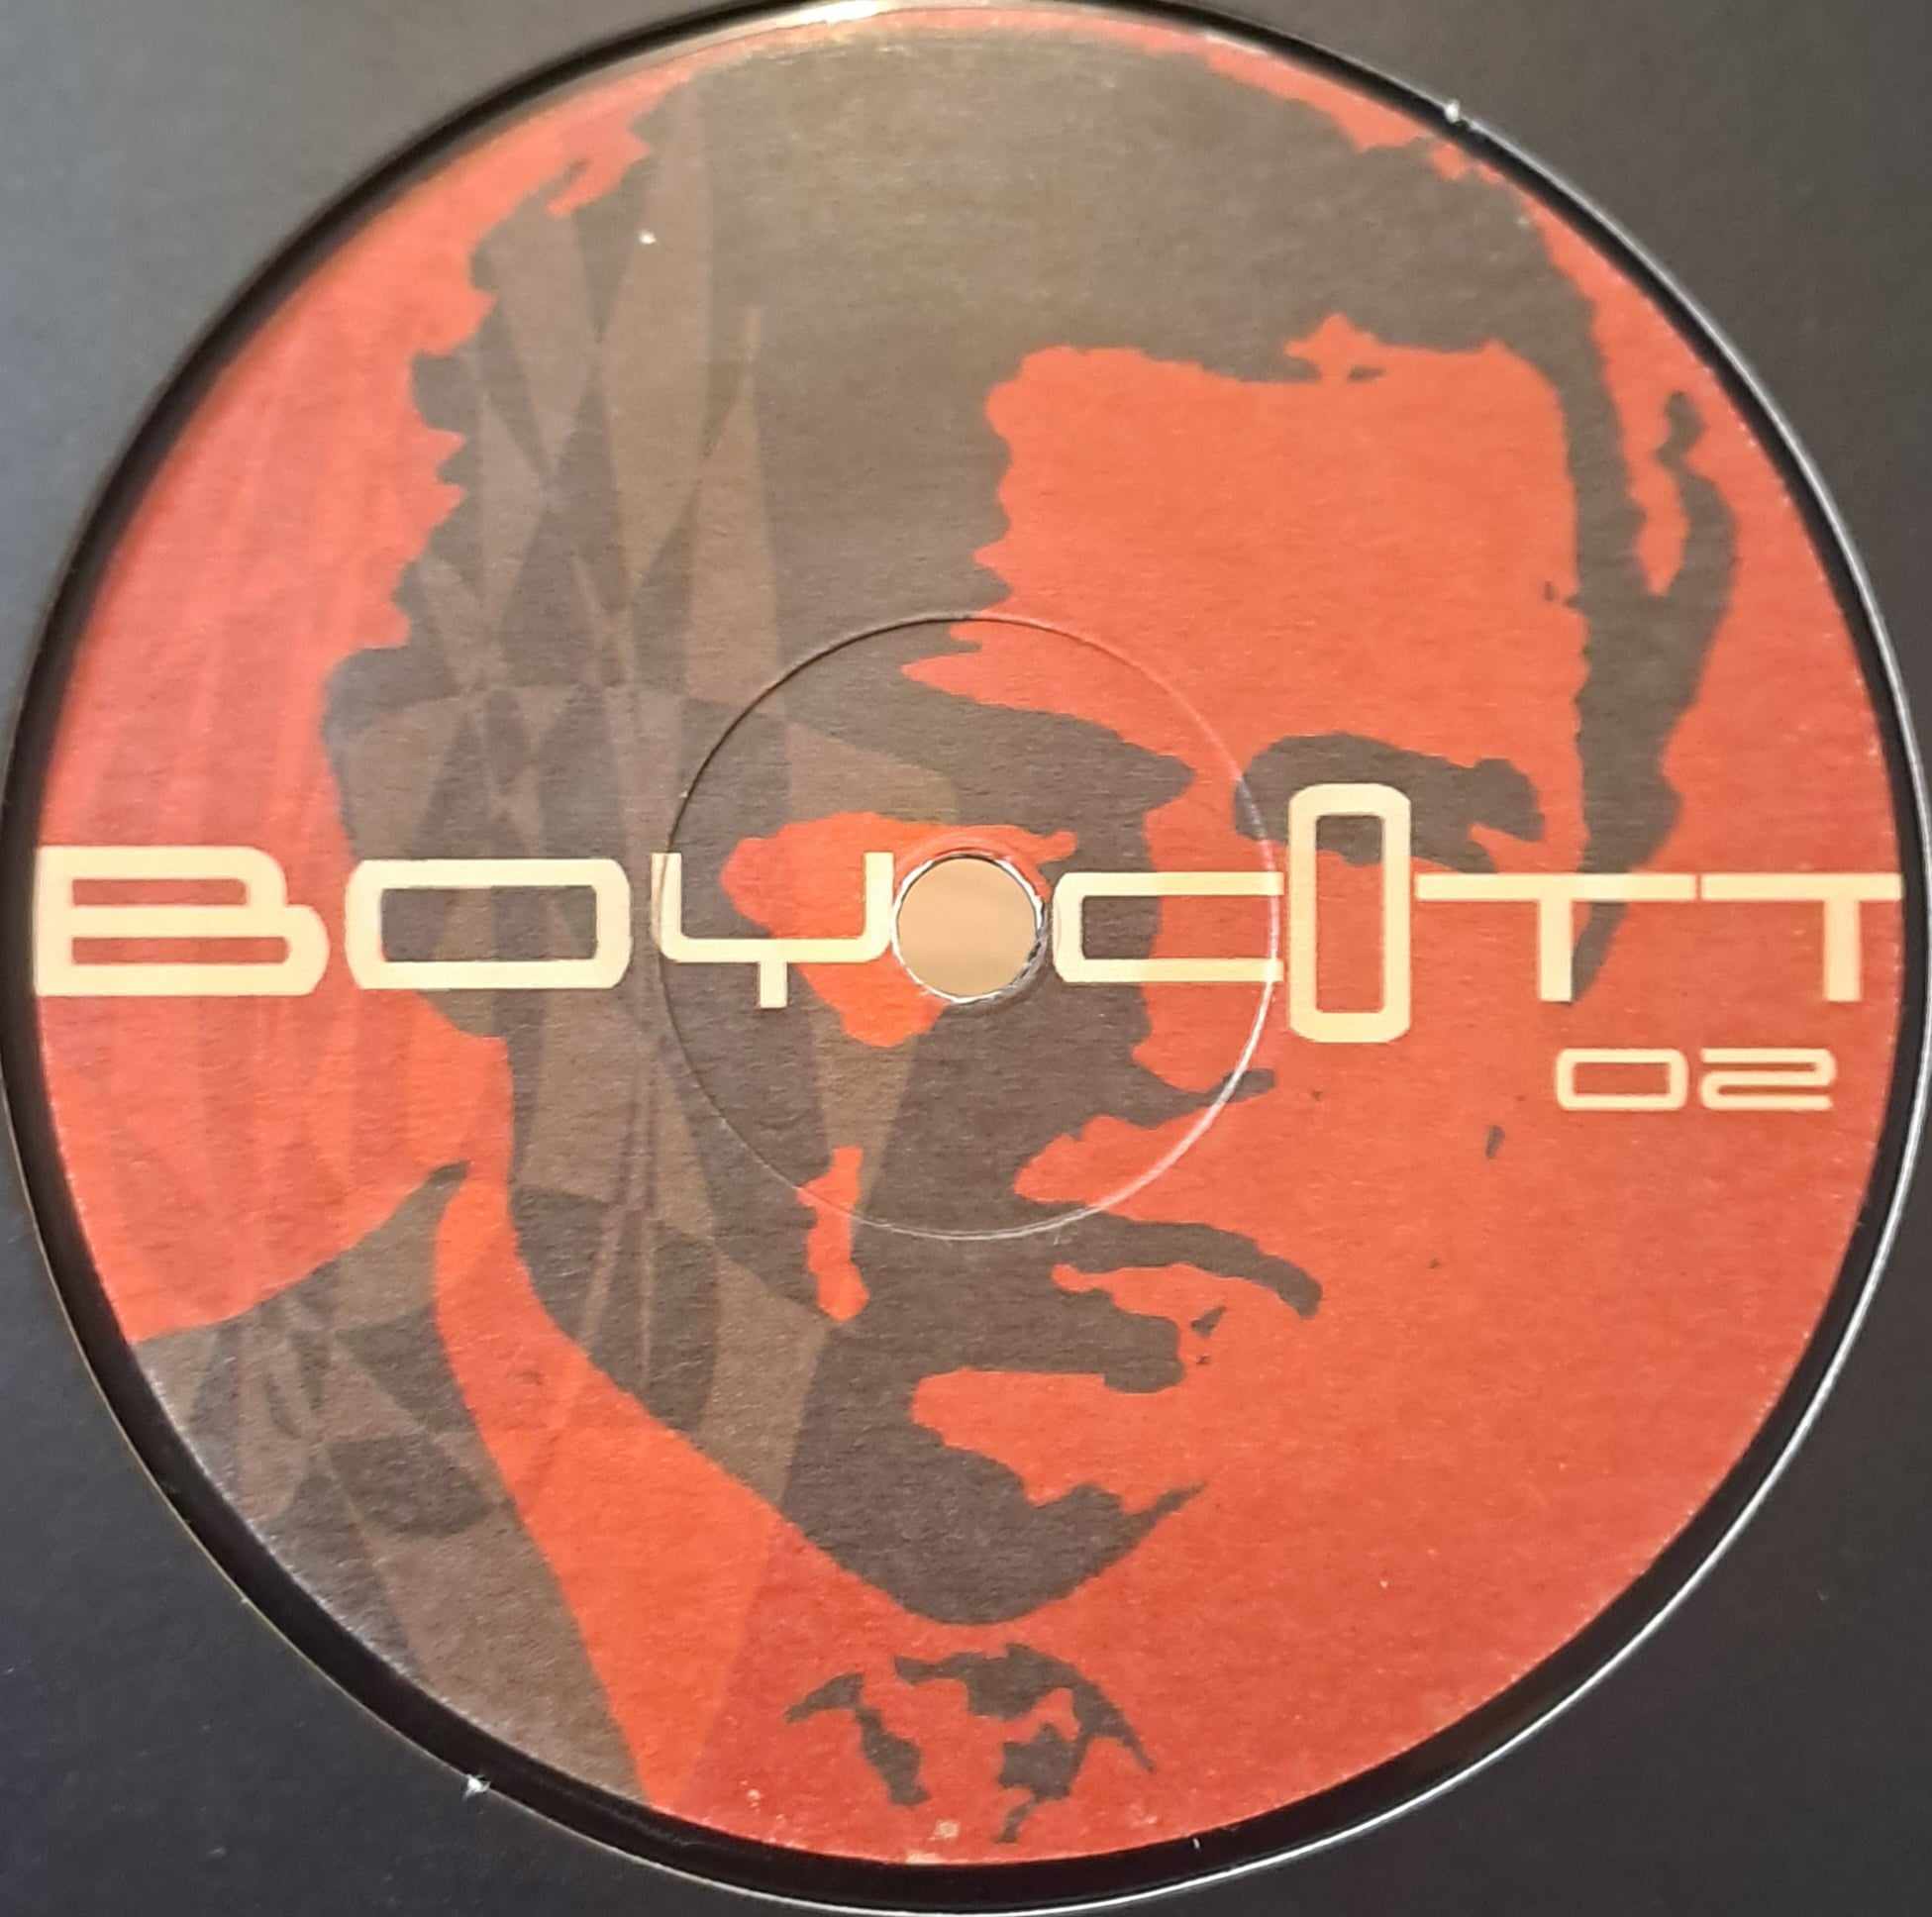 Boycott 002 - vinyle freetekno